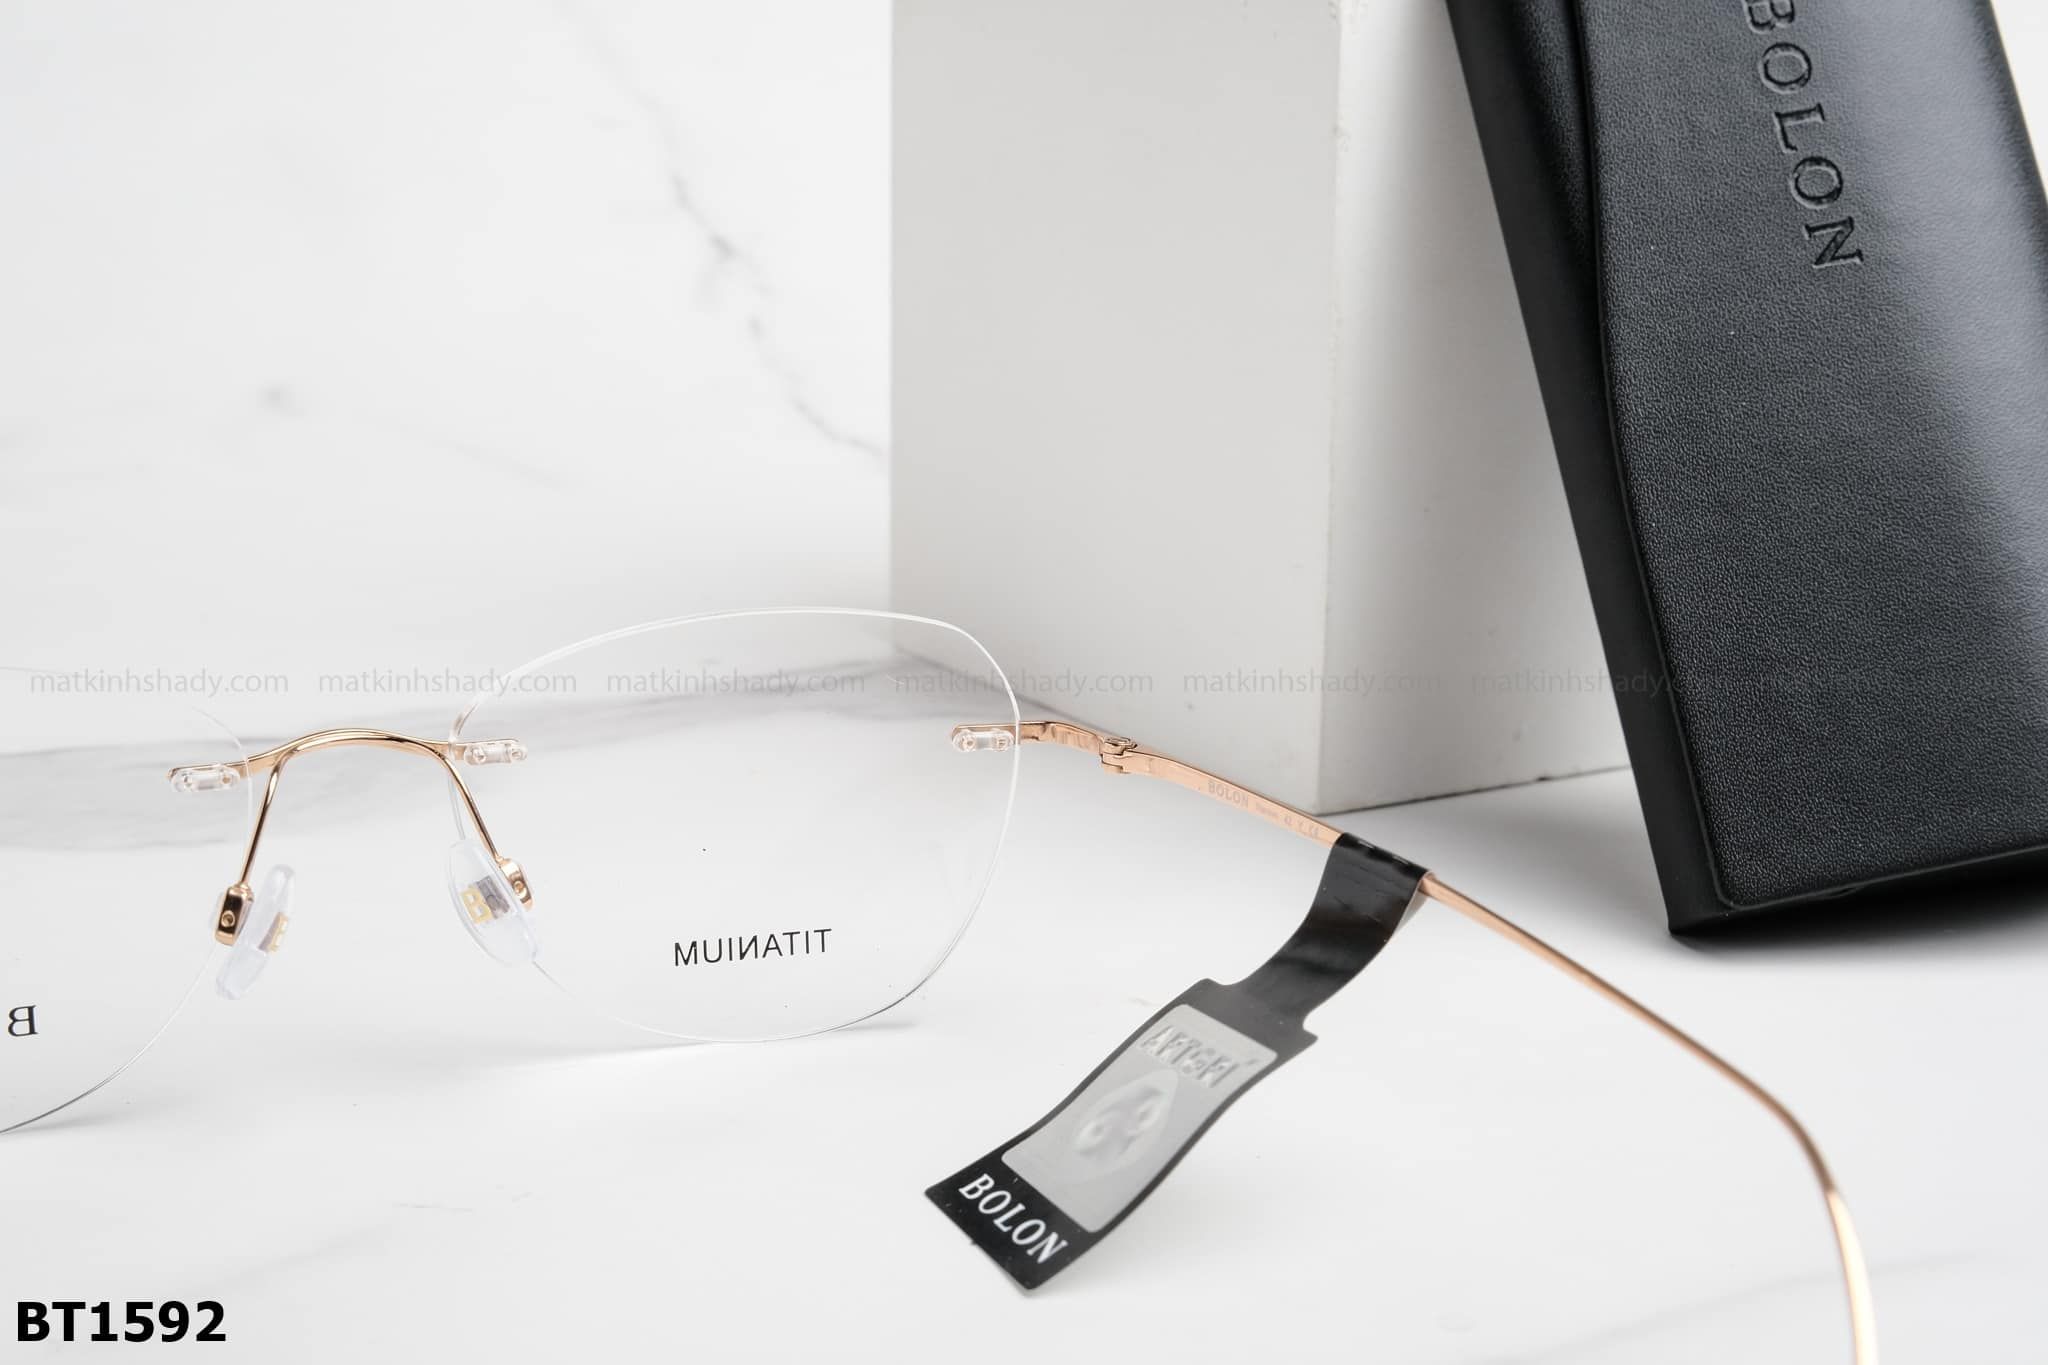  Bolon Eyewear - Glasses - BT1592 